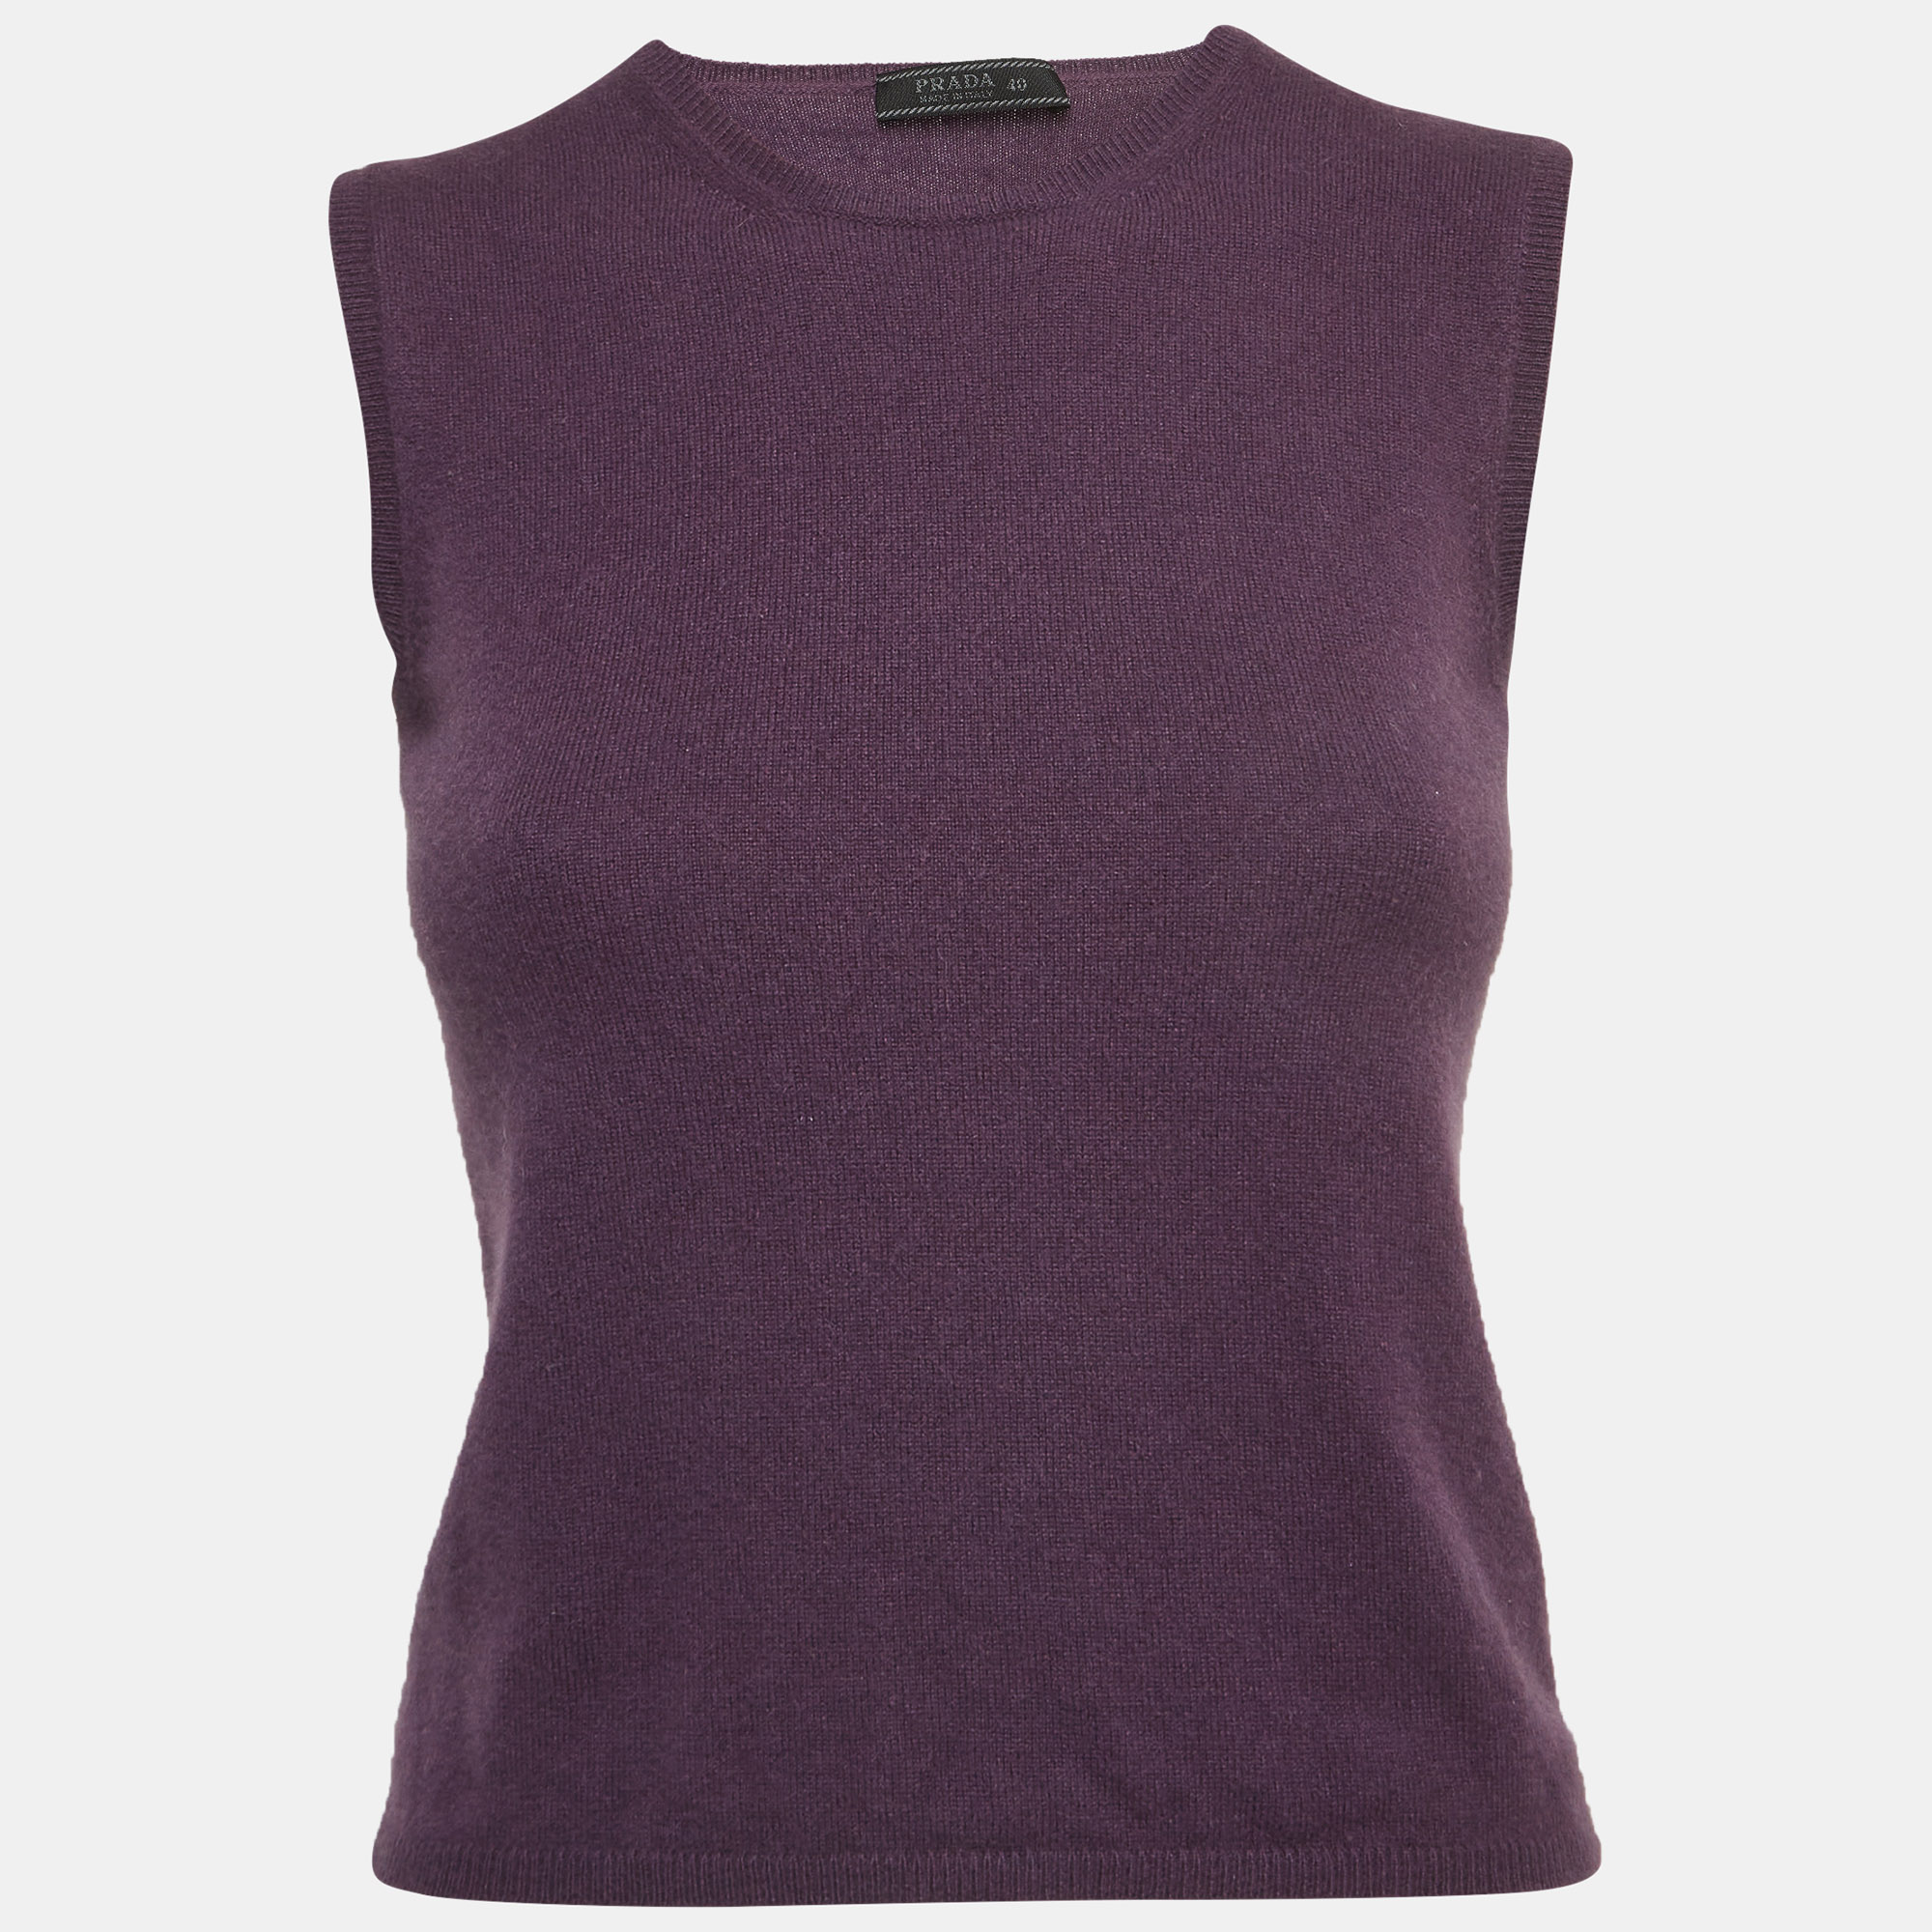 Prada vintage purple cashmere sleeveless top s